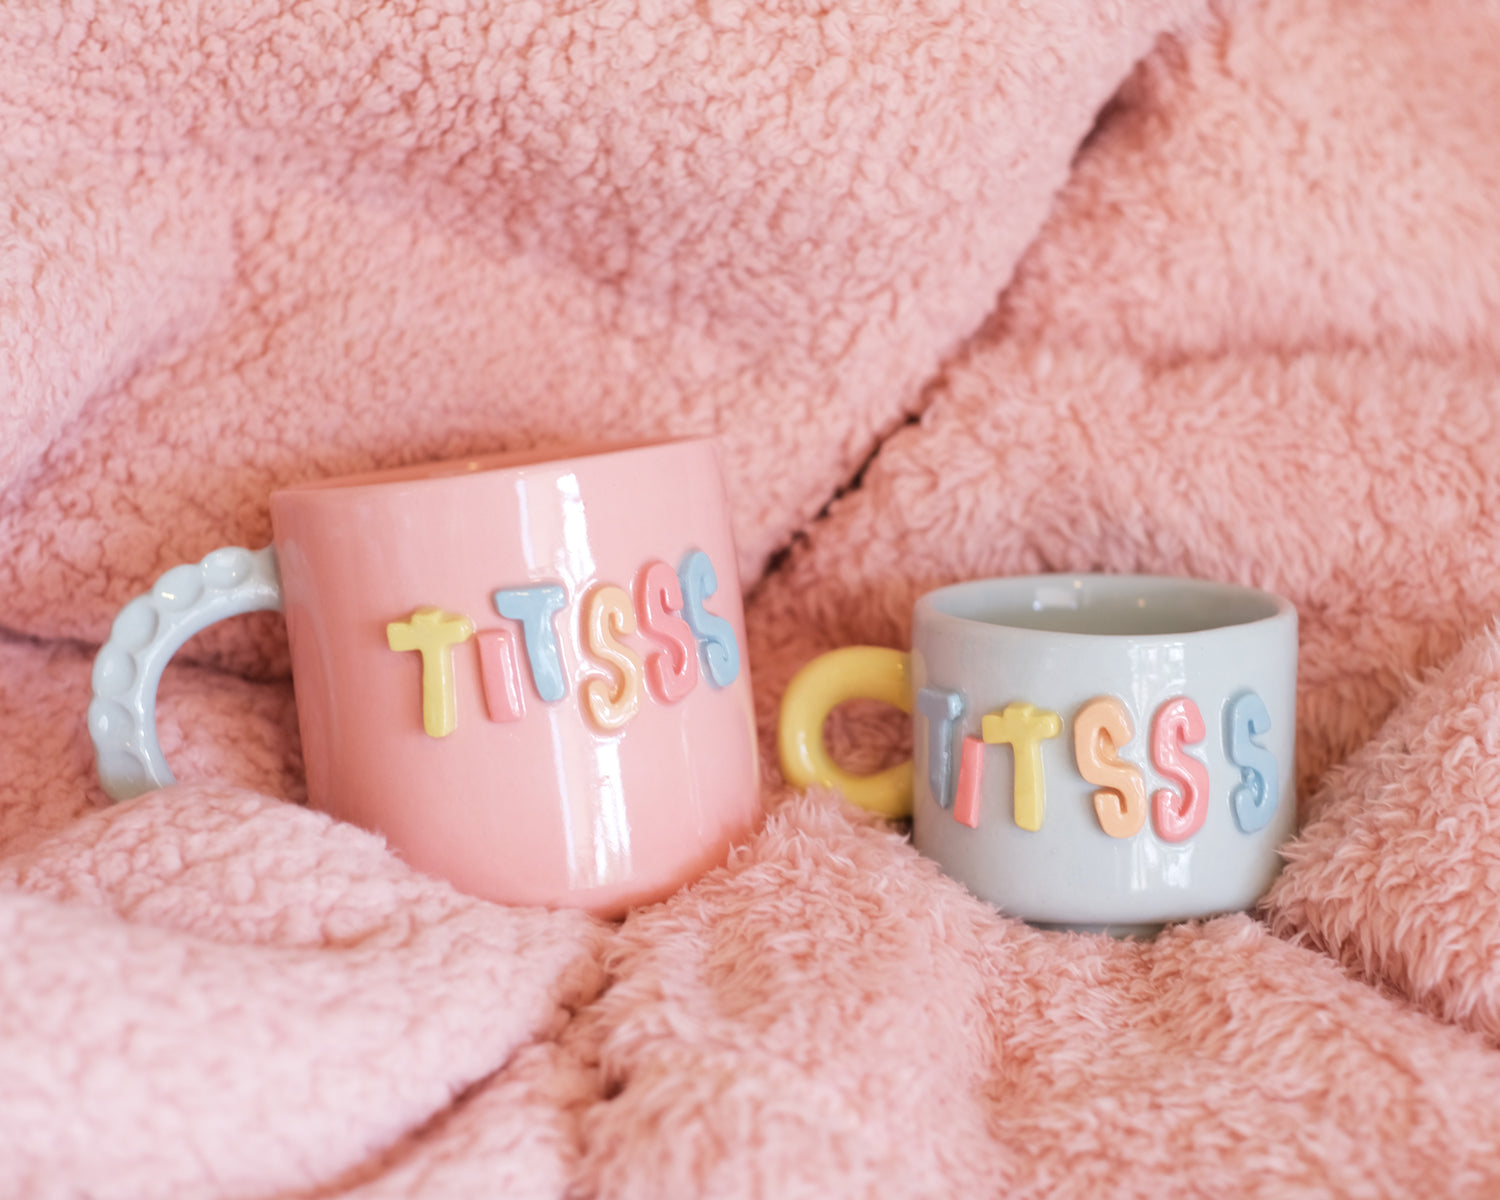 Titsss - Teacup mug